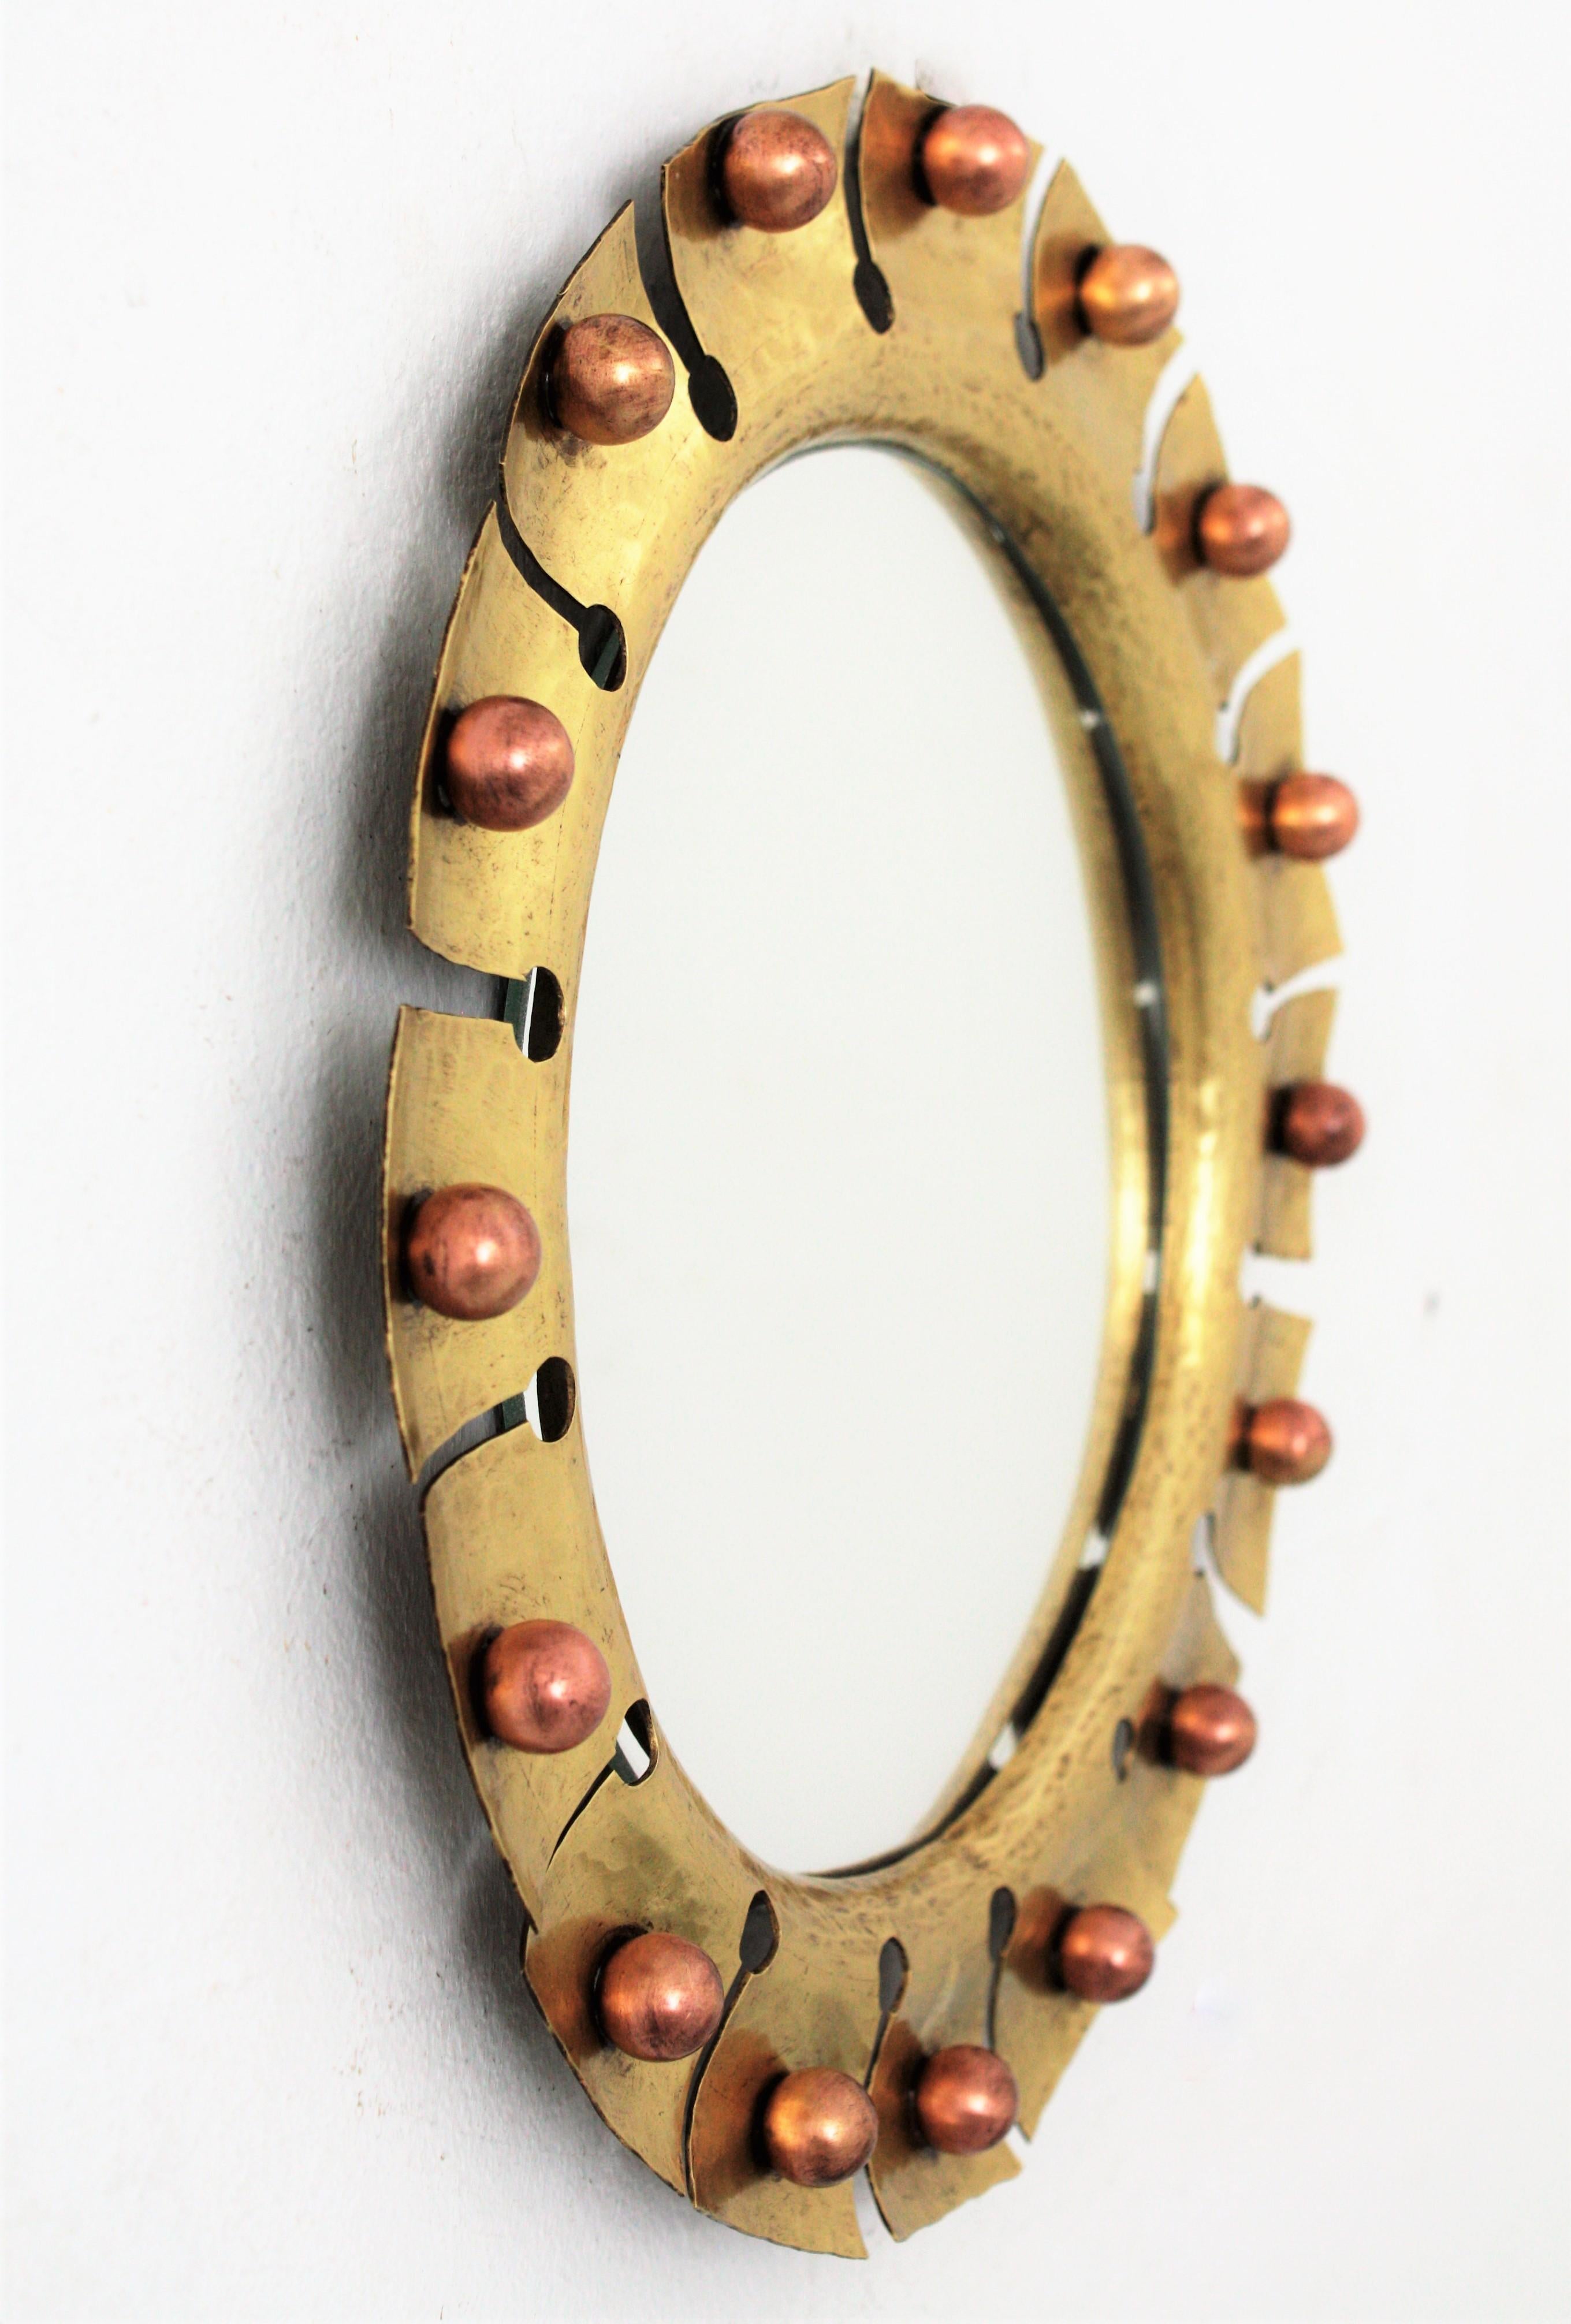 Sunburst Round Mirror in Brass with Copper Balls Accents For Sale 1